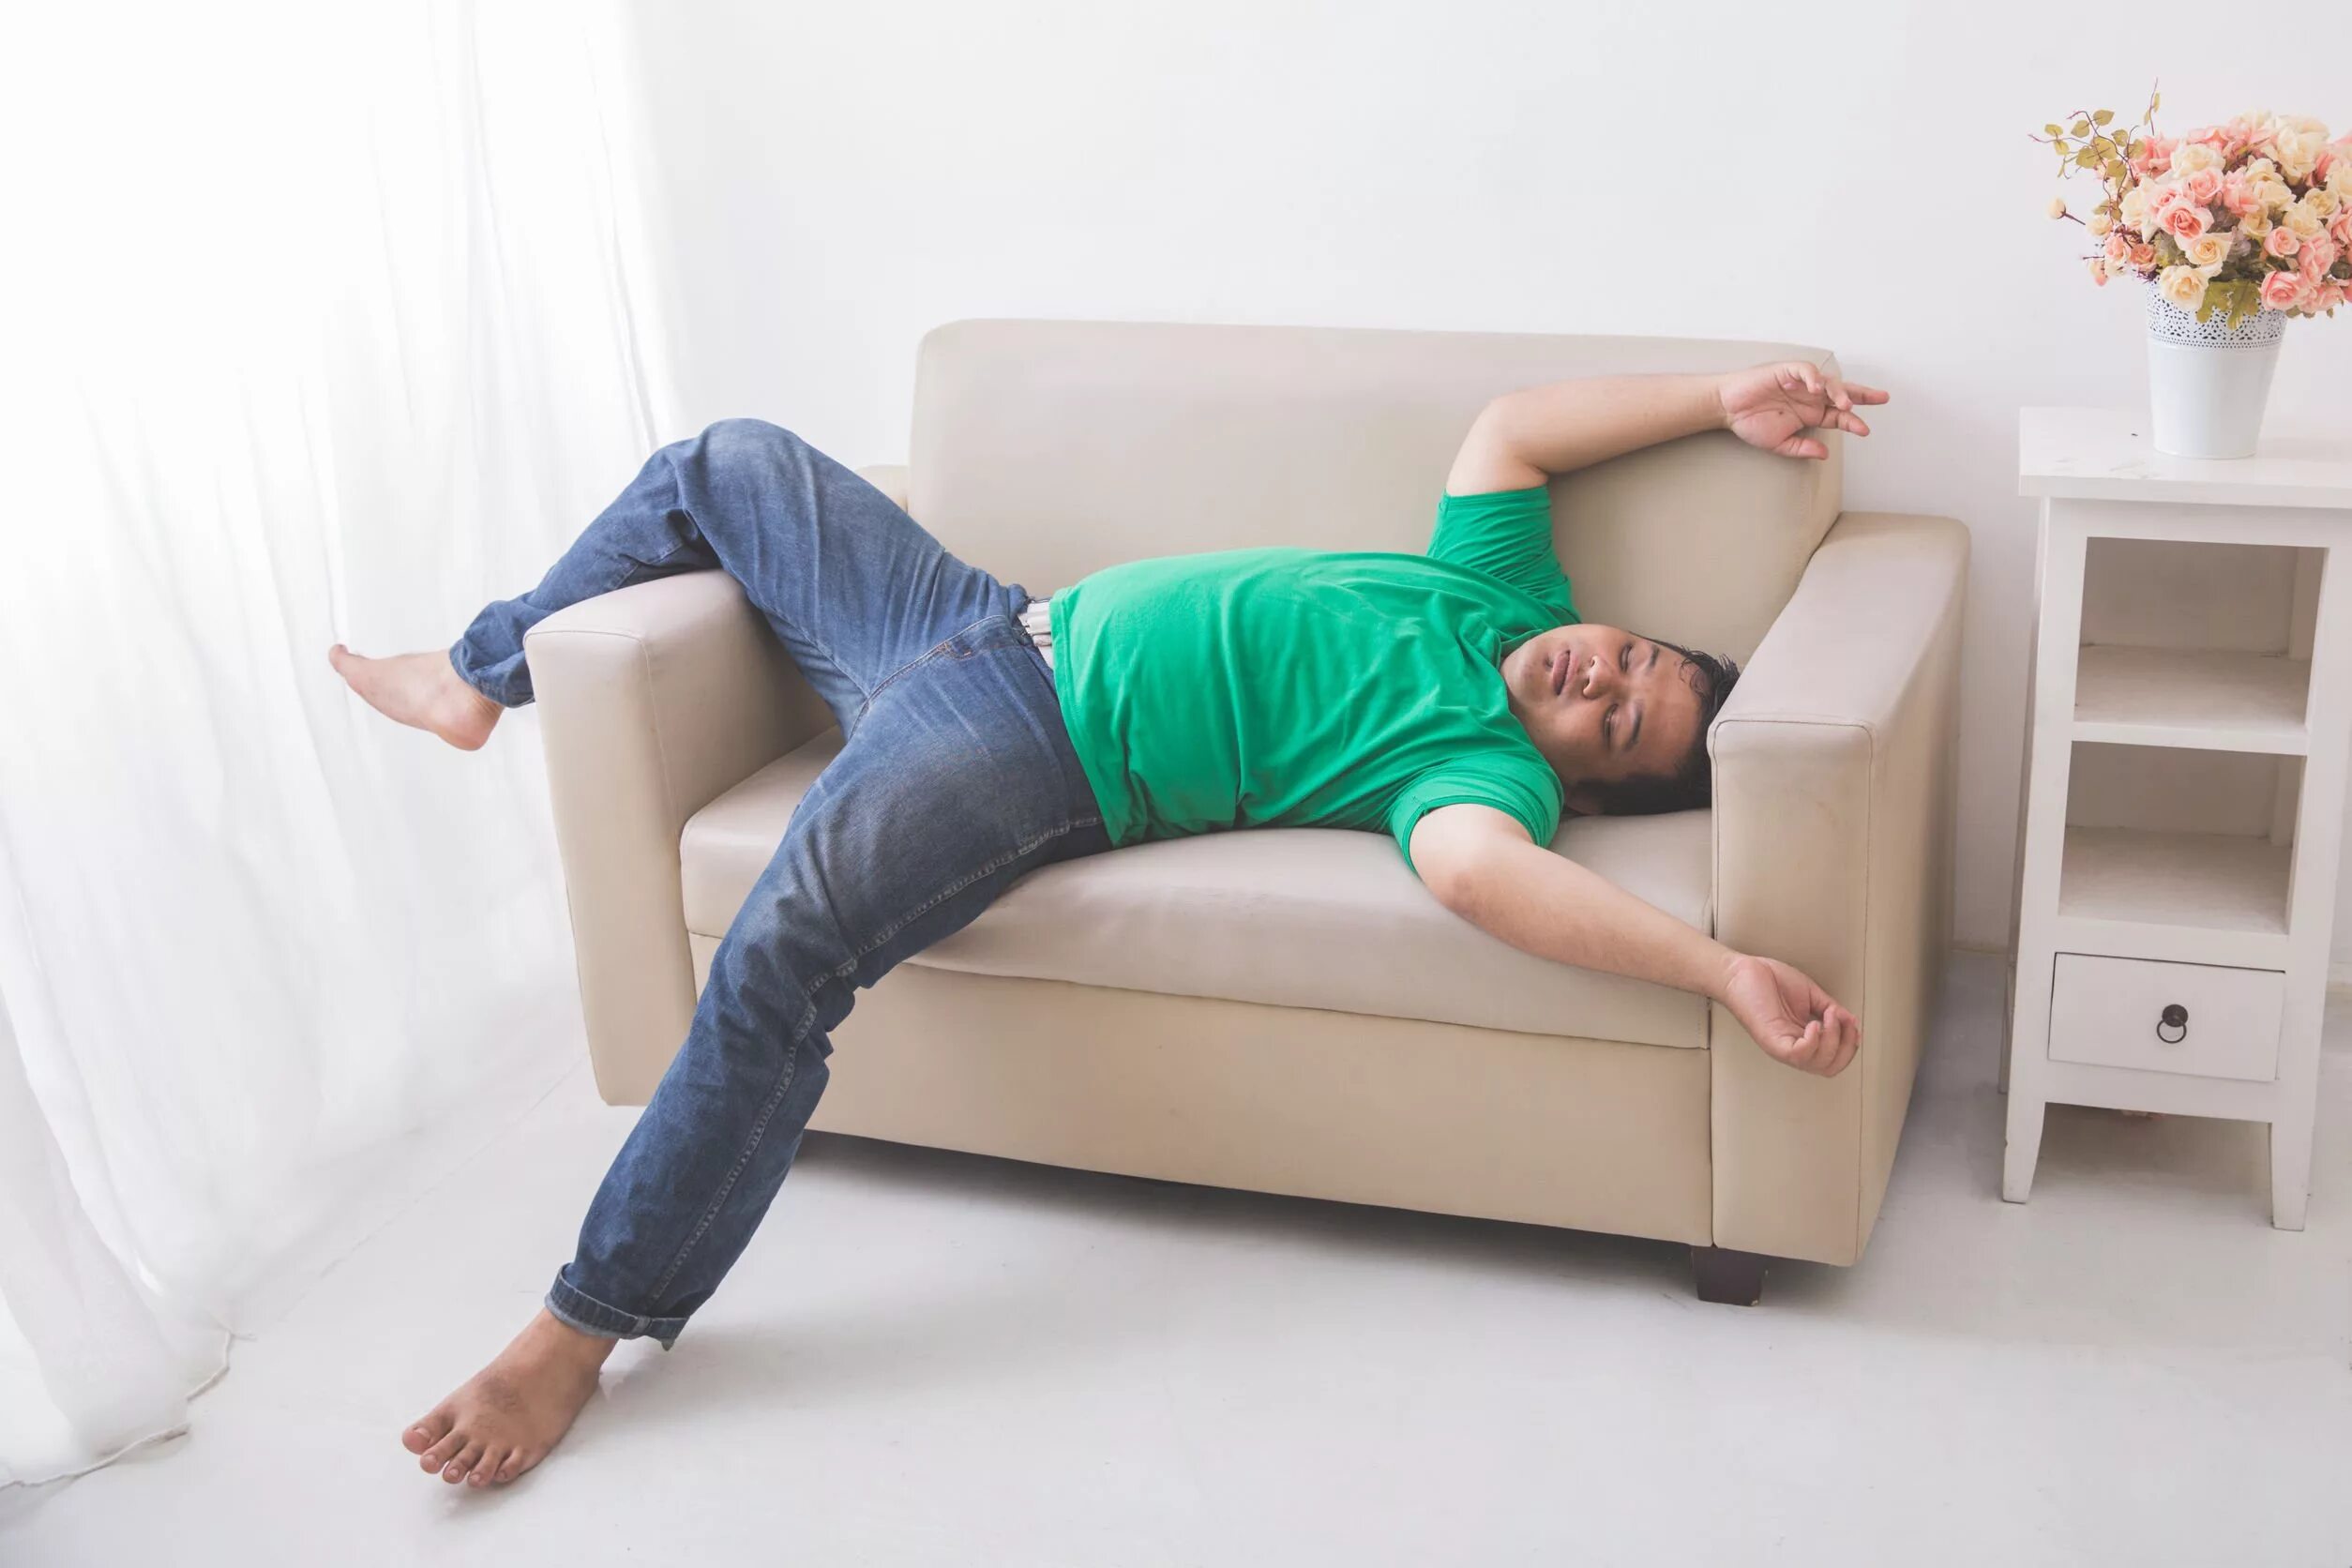 Картинки лежа на диване. Спящий человек на диване. Человек лежит на диване. Уставший человек на диване.